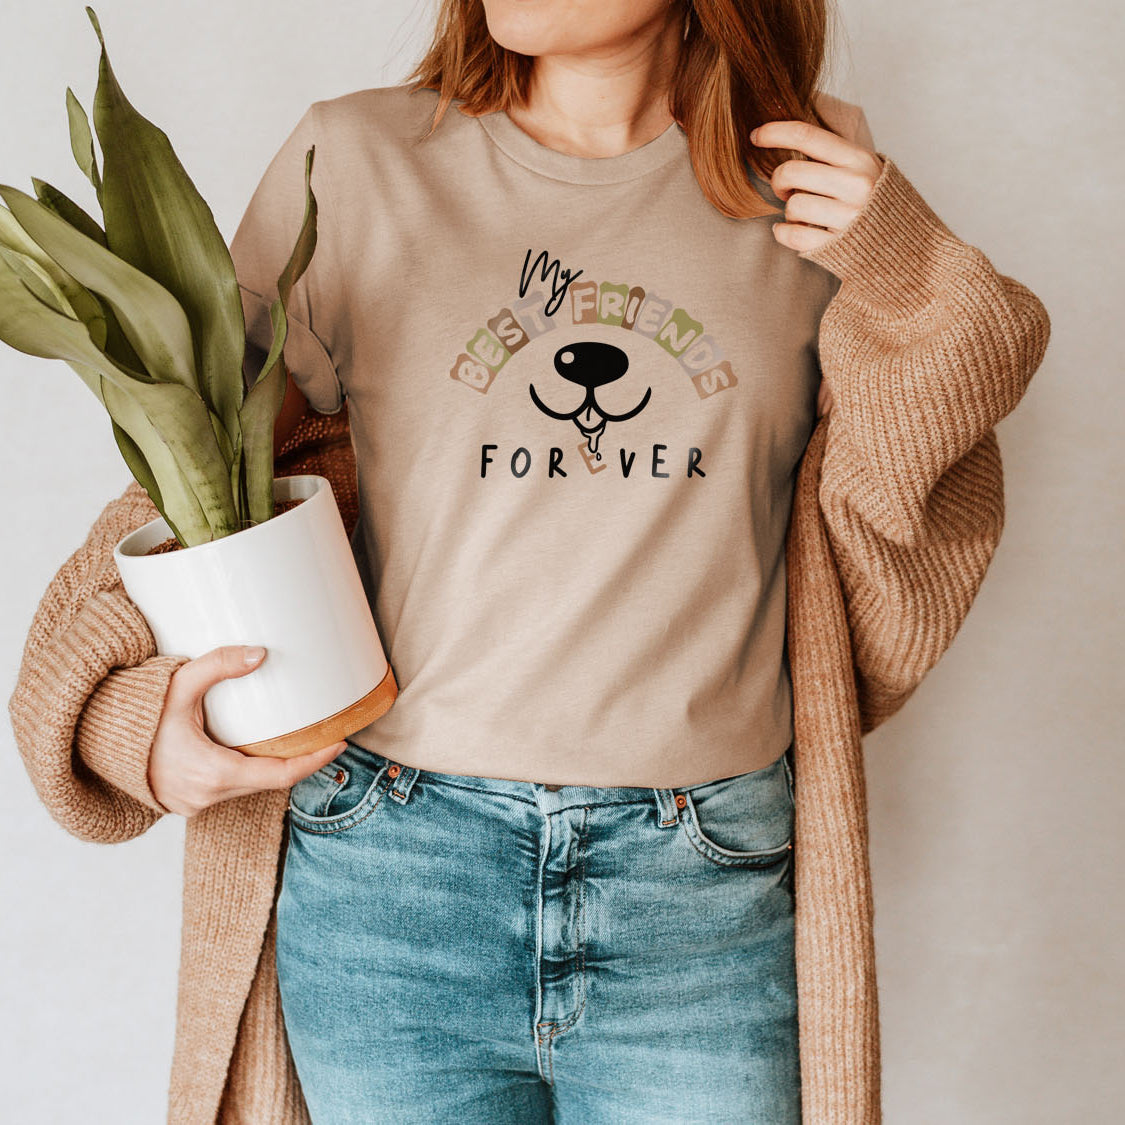 My Best Friends Forever Puppy Ver. T-shirt - Fun Pet Love Design Printed Tee Shirt